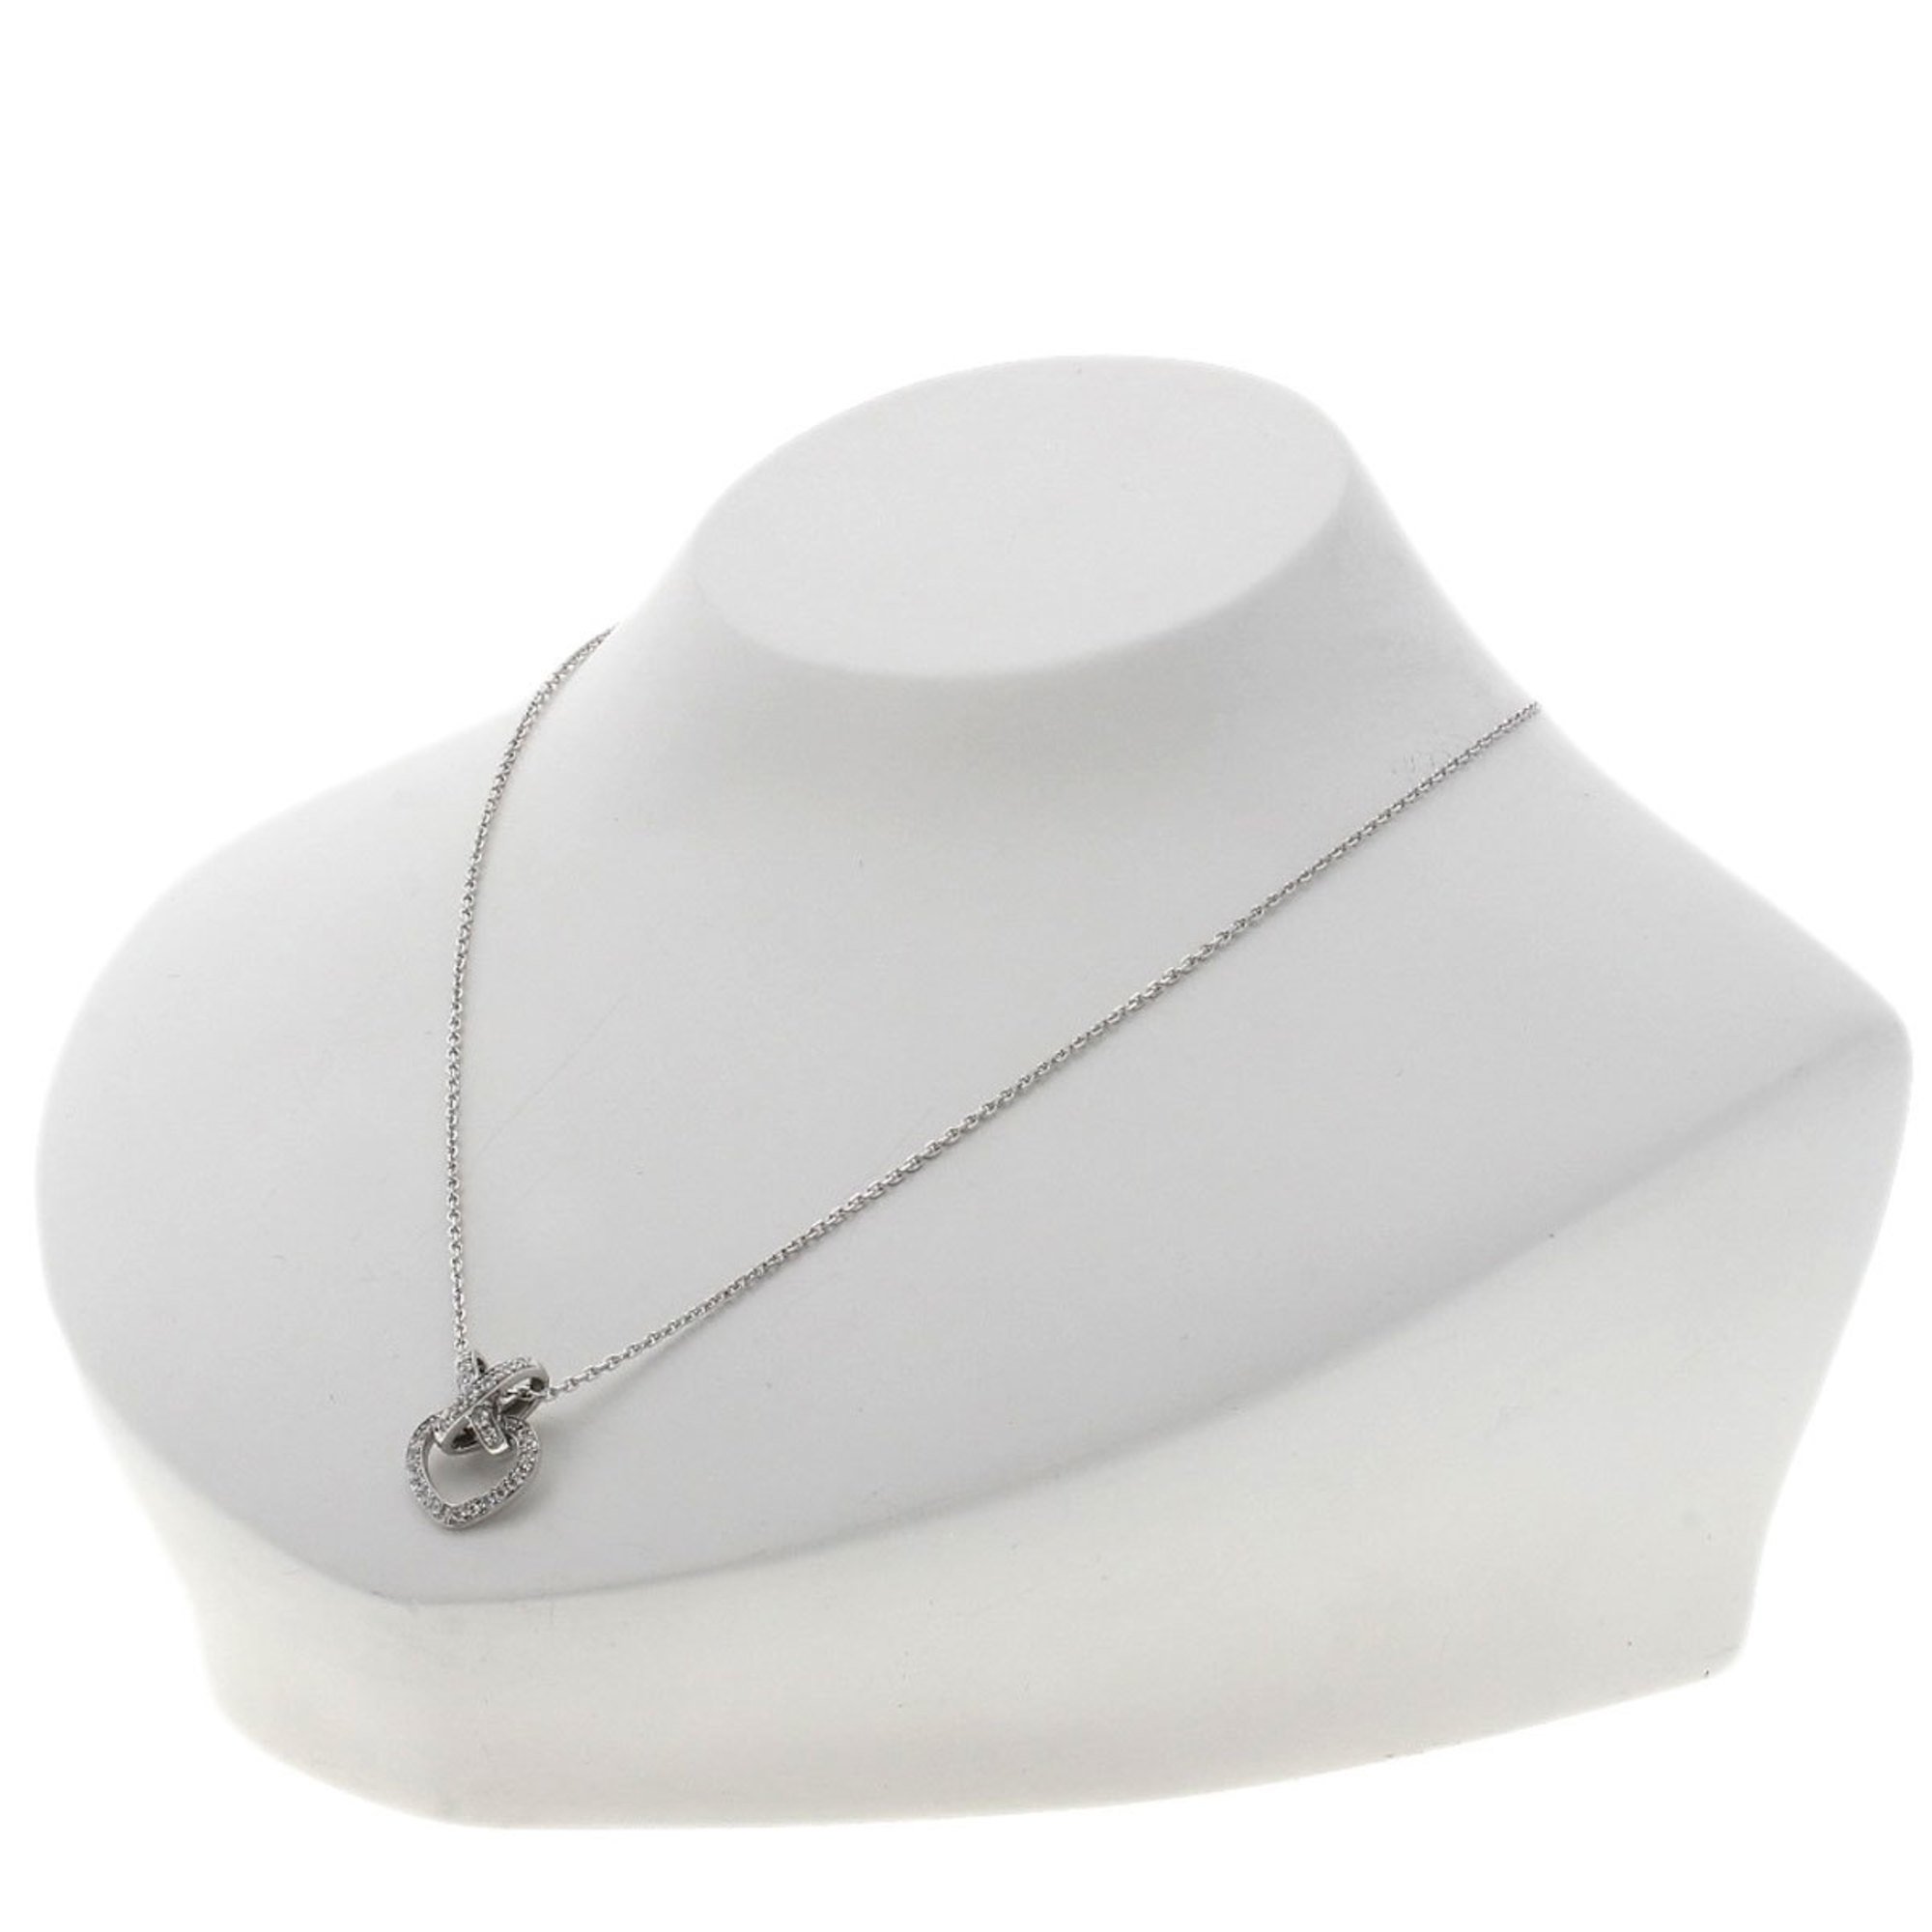 Chaumet Lien Heart Diamond Necklace K18 White Gold for Women